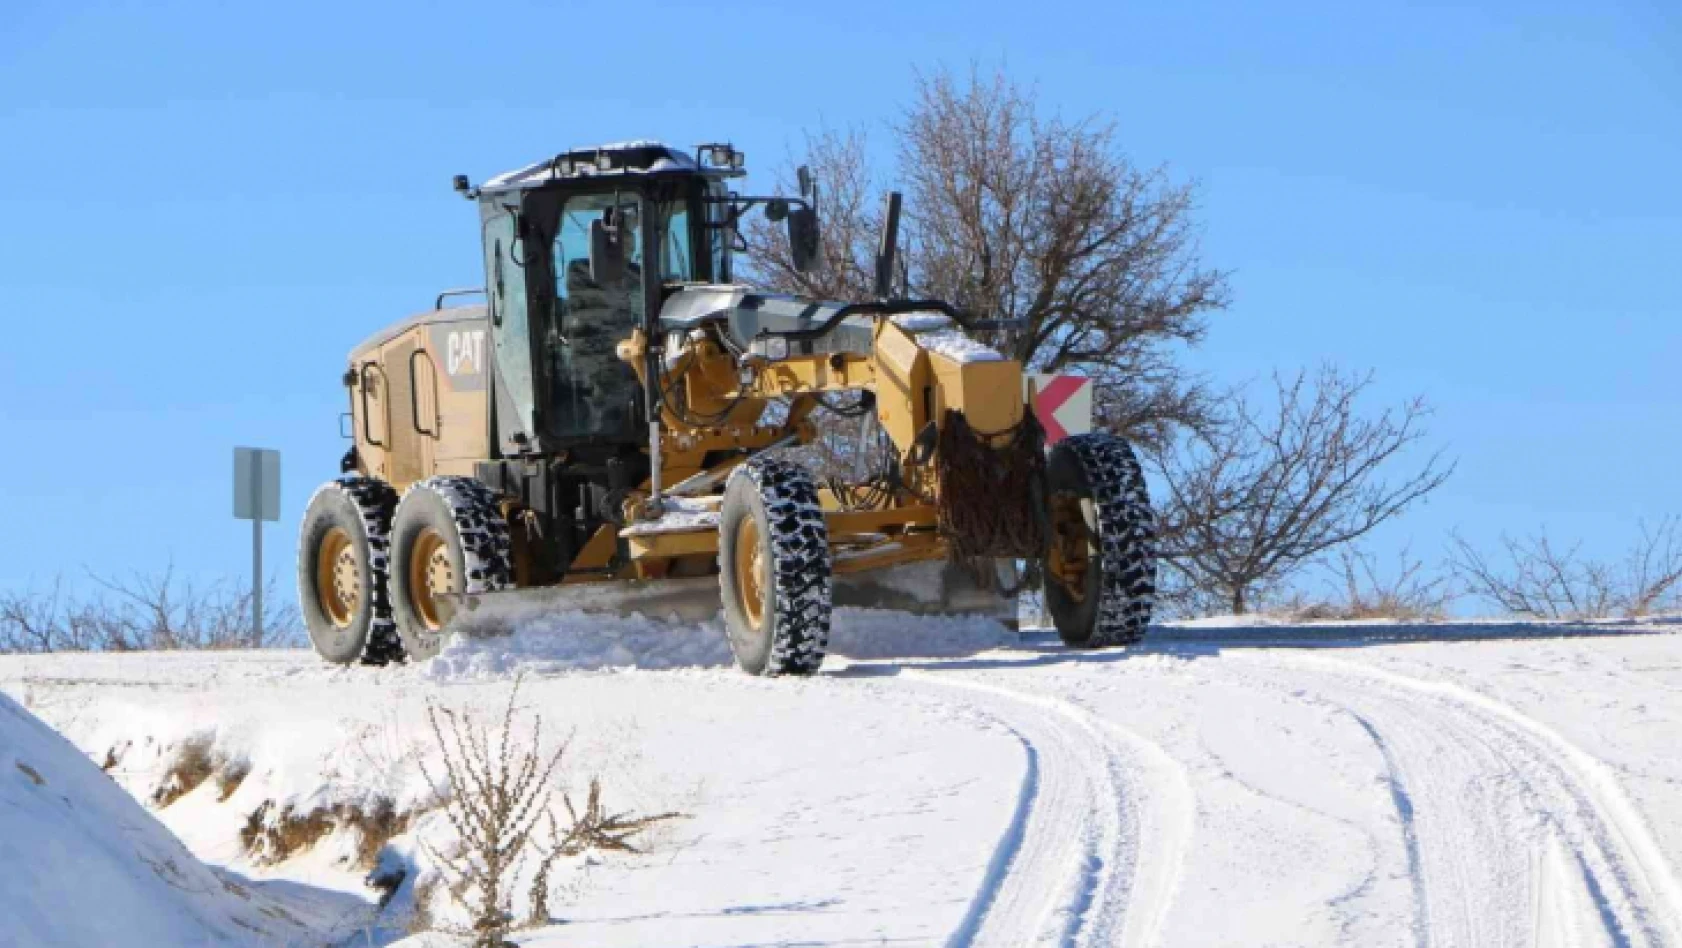 Elazığ'da 13 köy yolu kar yağışından dolayı ulaşıma kapandı